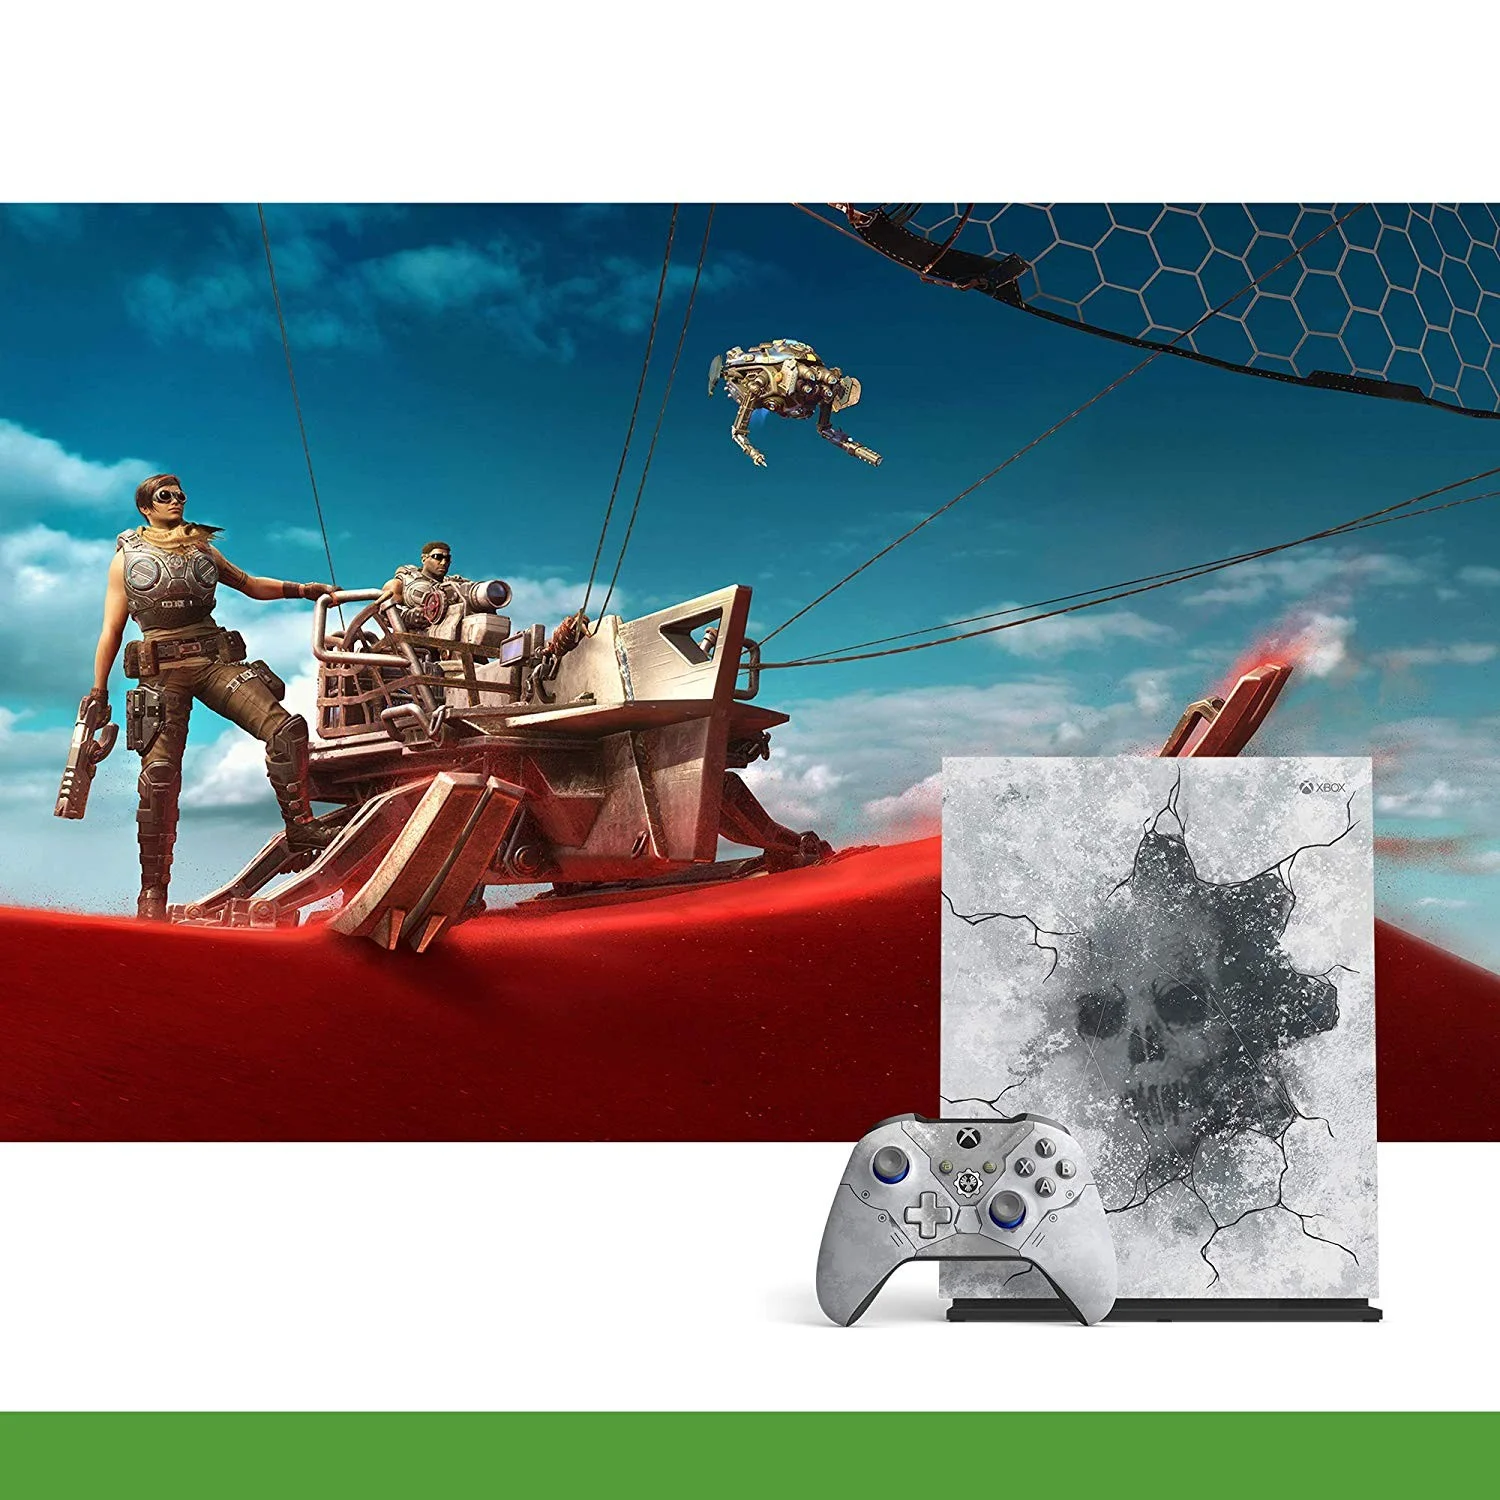 Microsoft к выходу Gears 5 выпустит лимитированный Xbox One X - фото 3